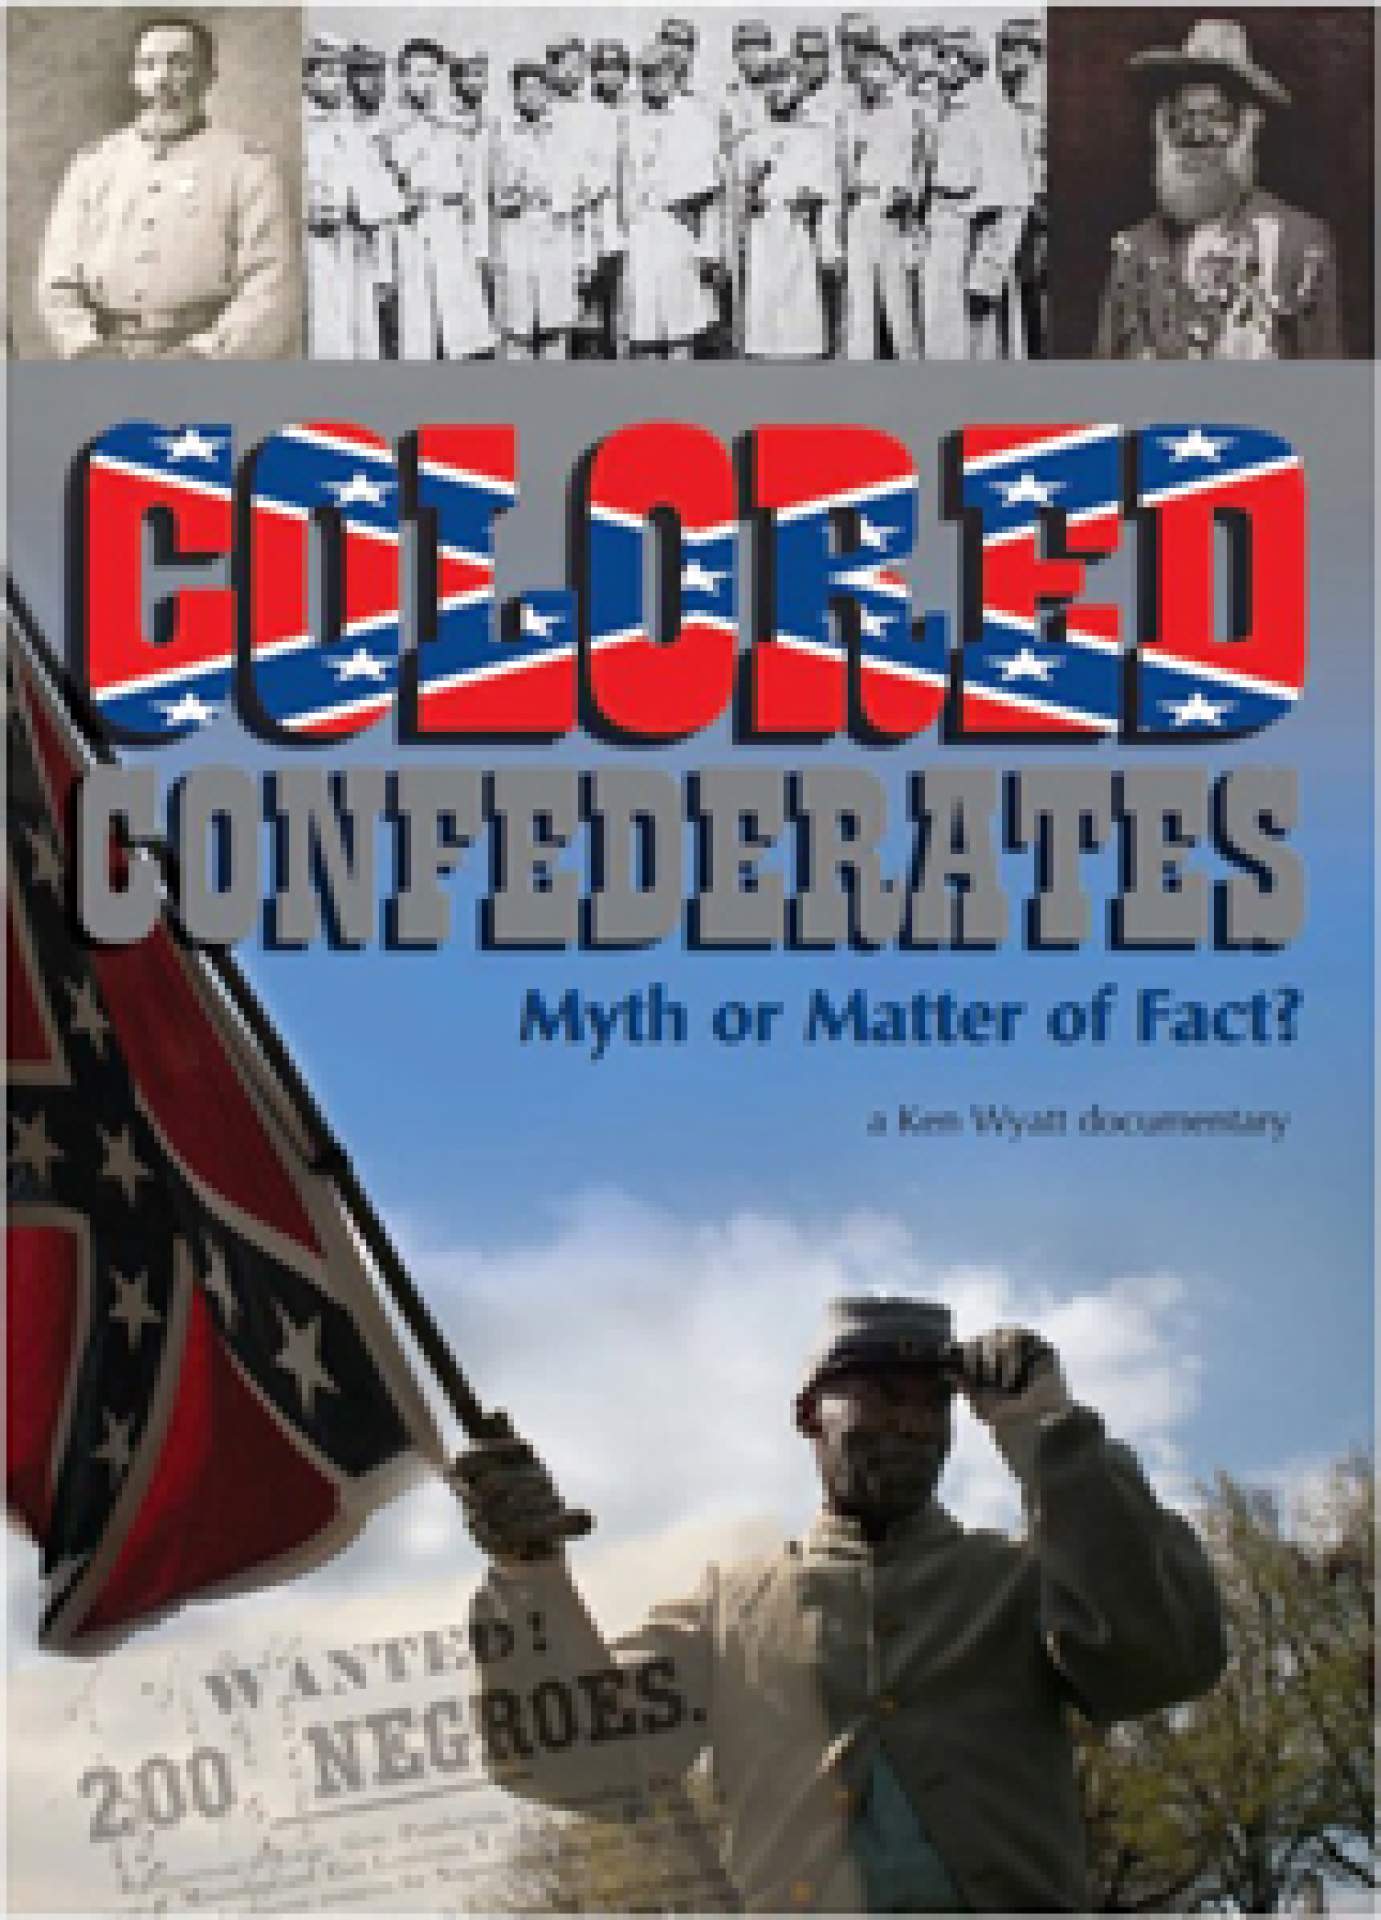 Colored Confederates